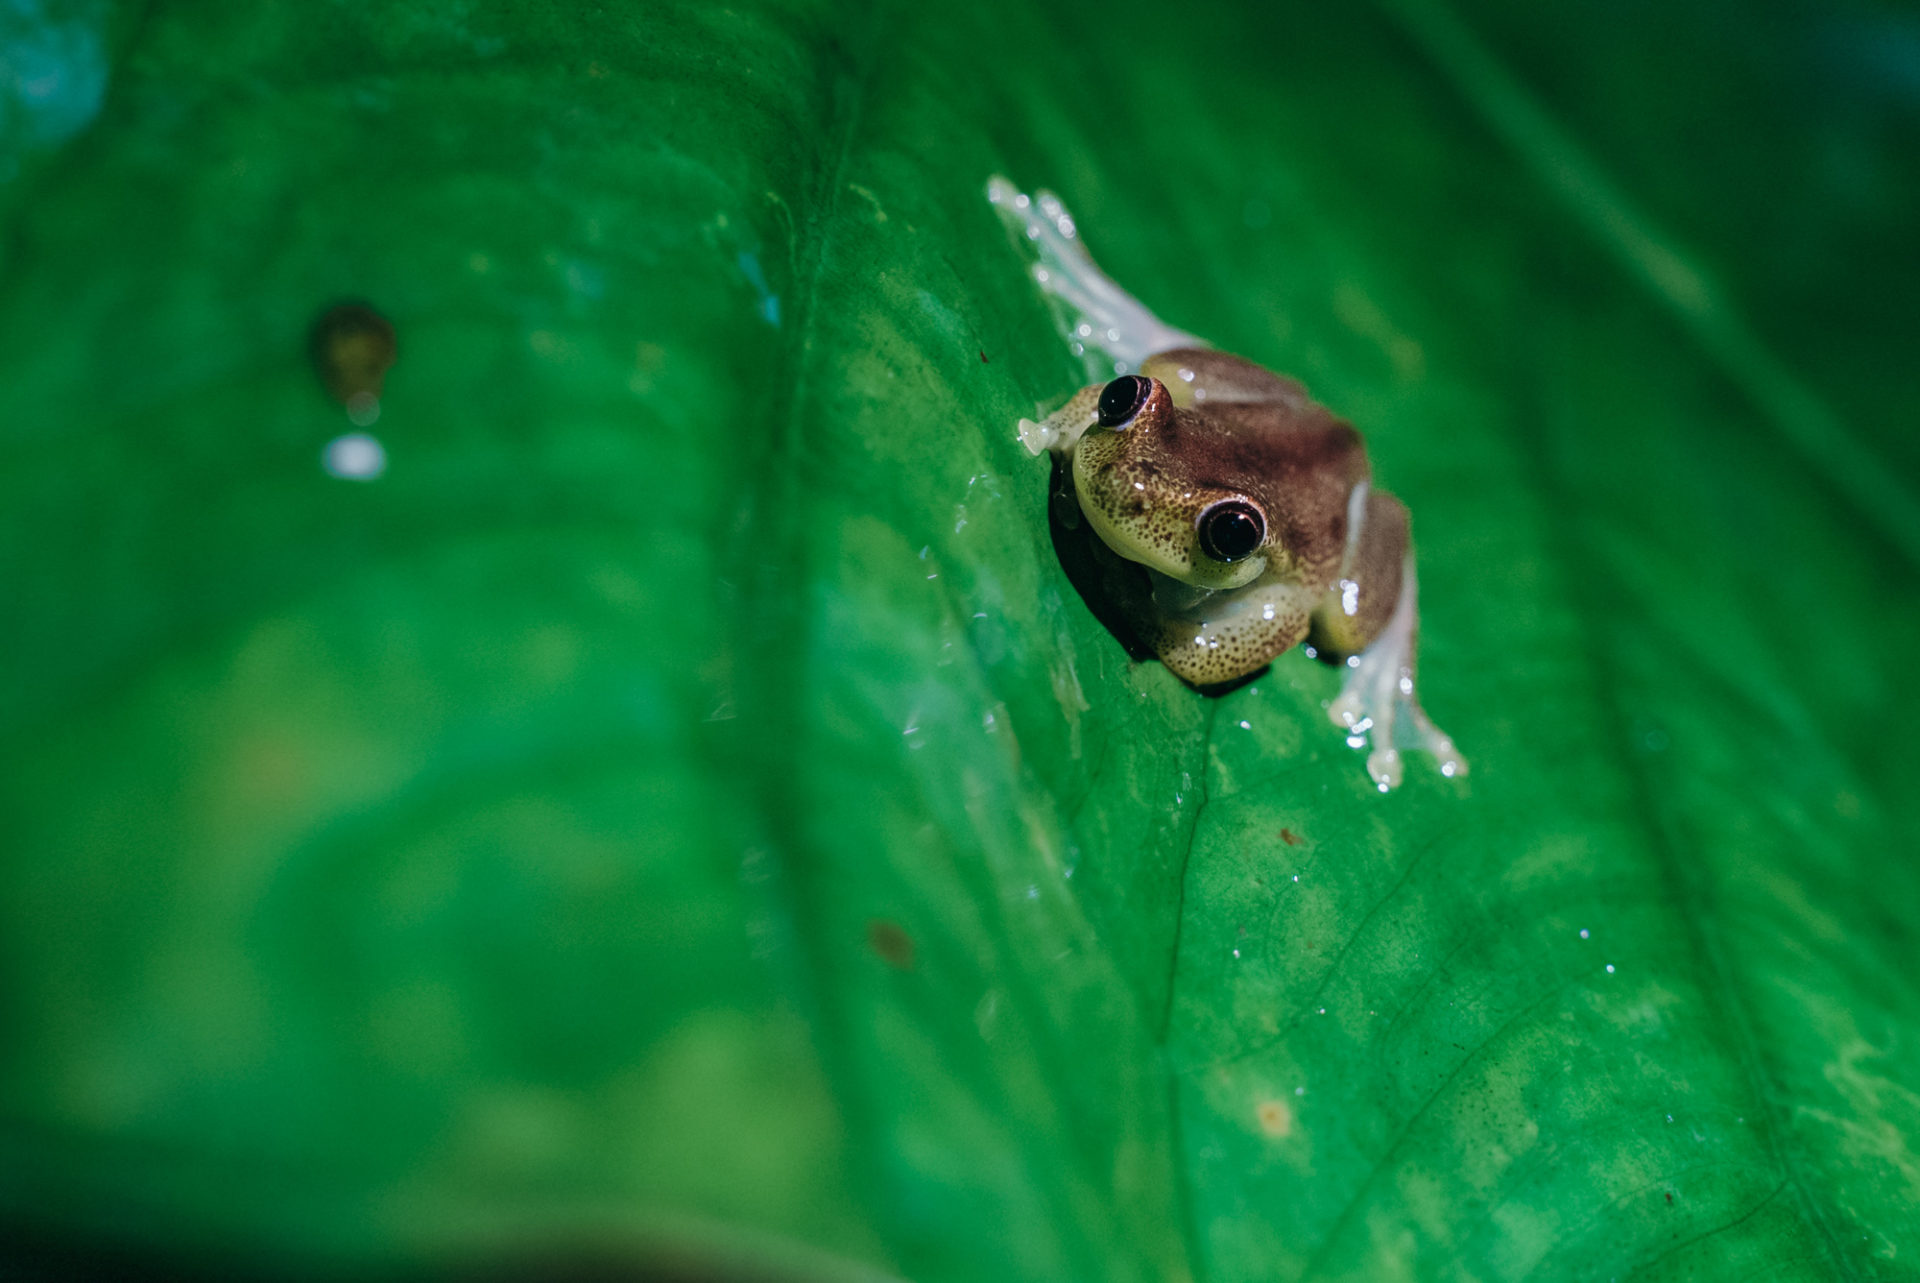 The endemic Mashpi frog